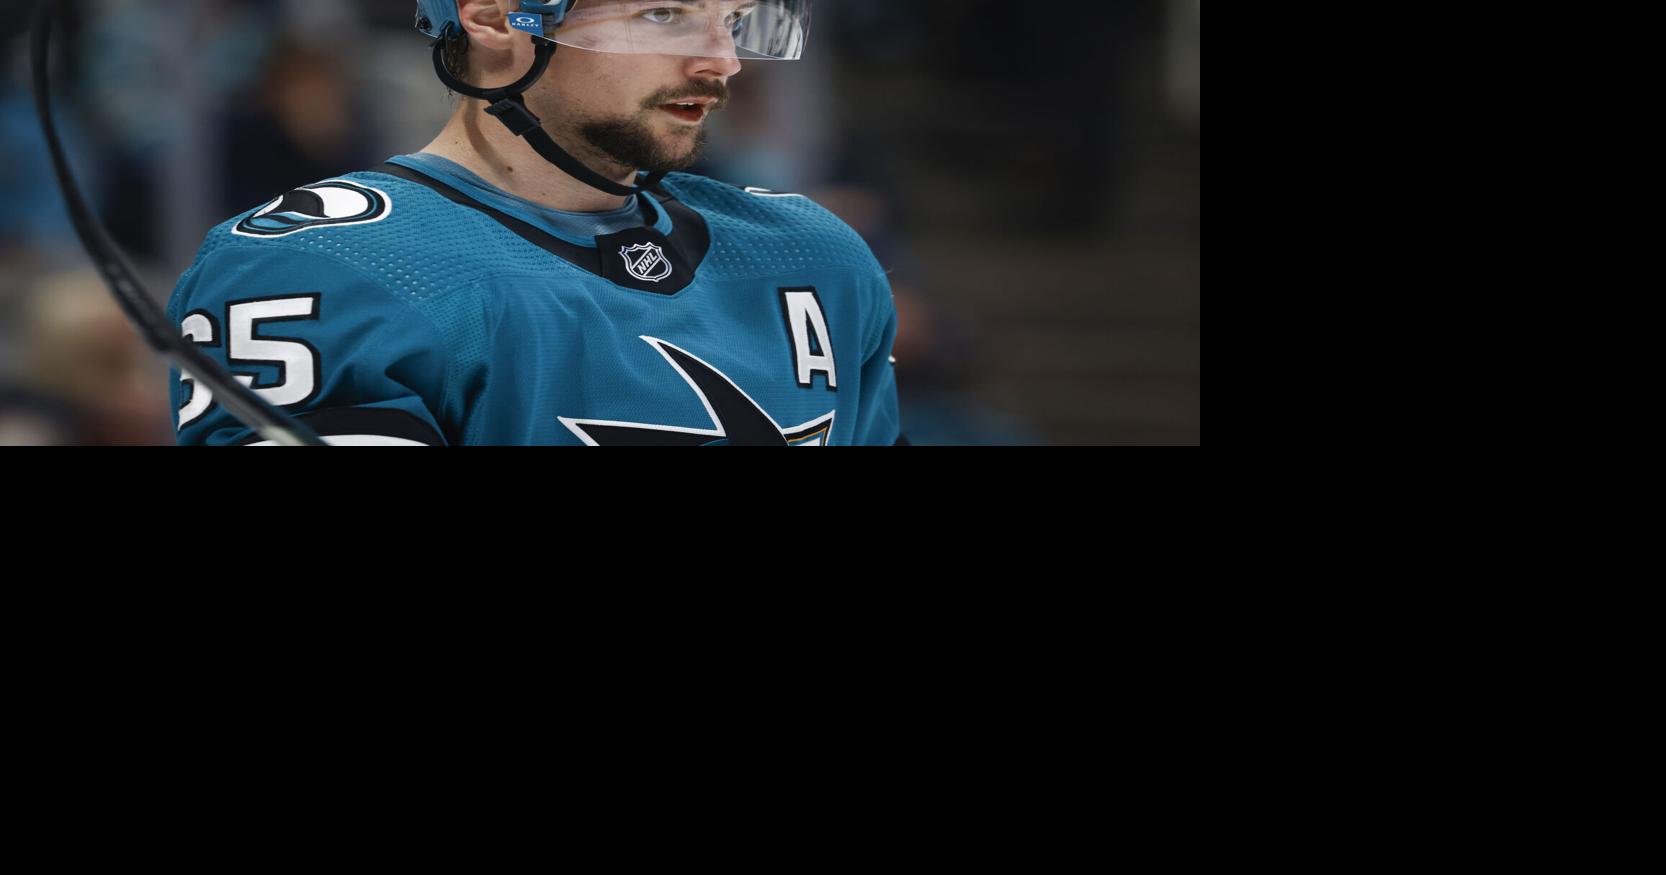 San Jose Sharks Light Uniform - National Hockey League (NHL